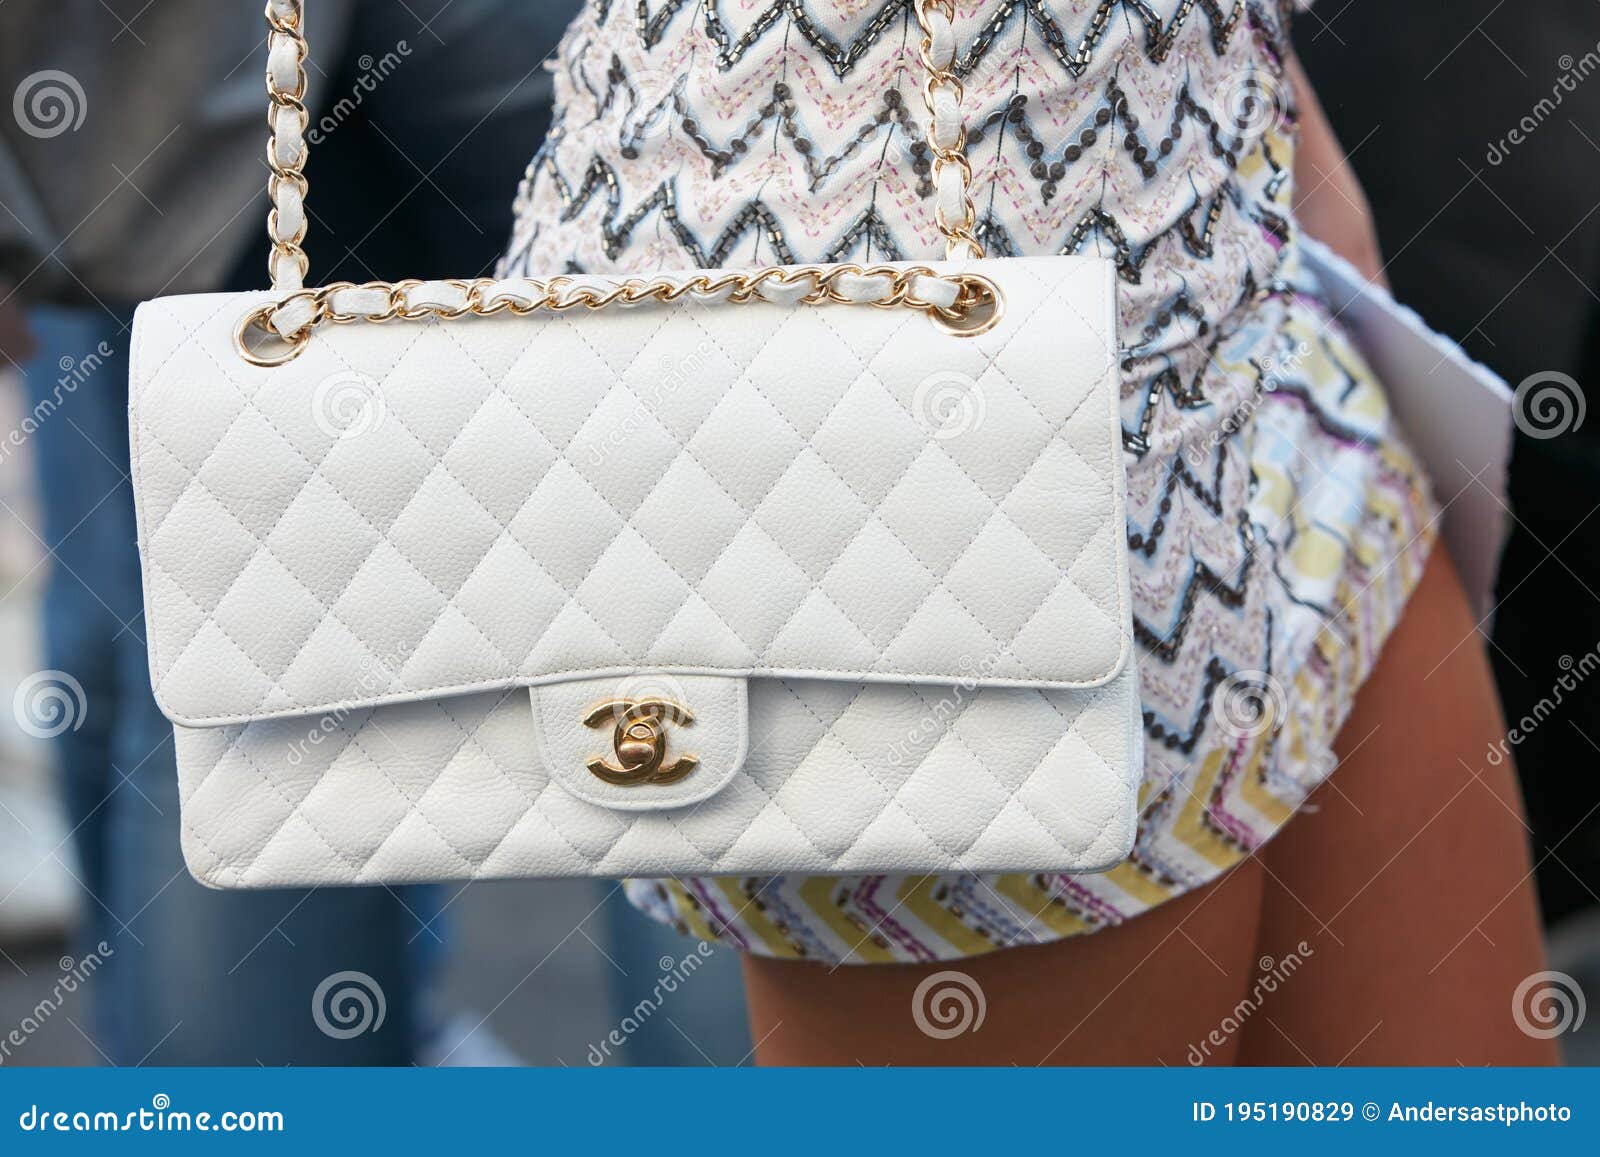 Woman with White Leather Chanel Bag before Salvatore Ferragamo